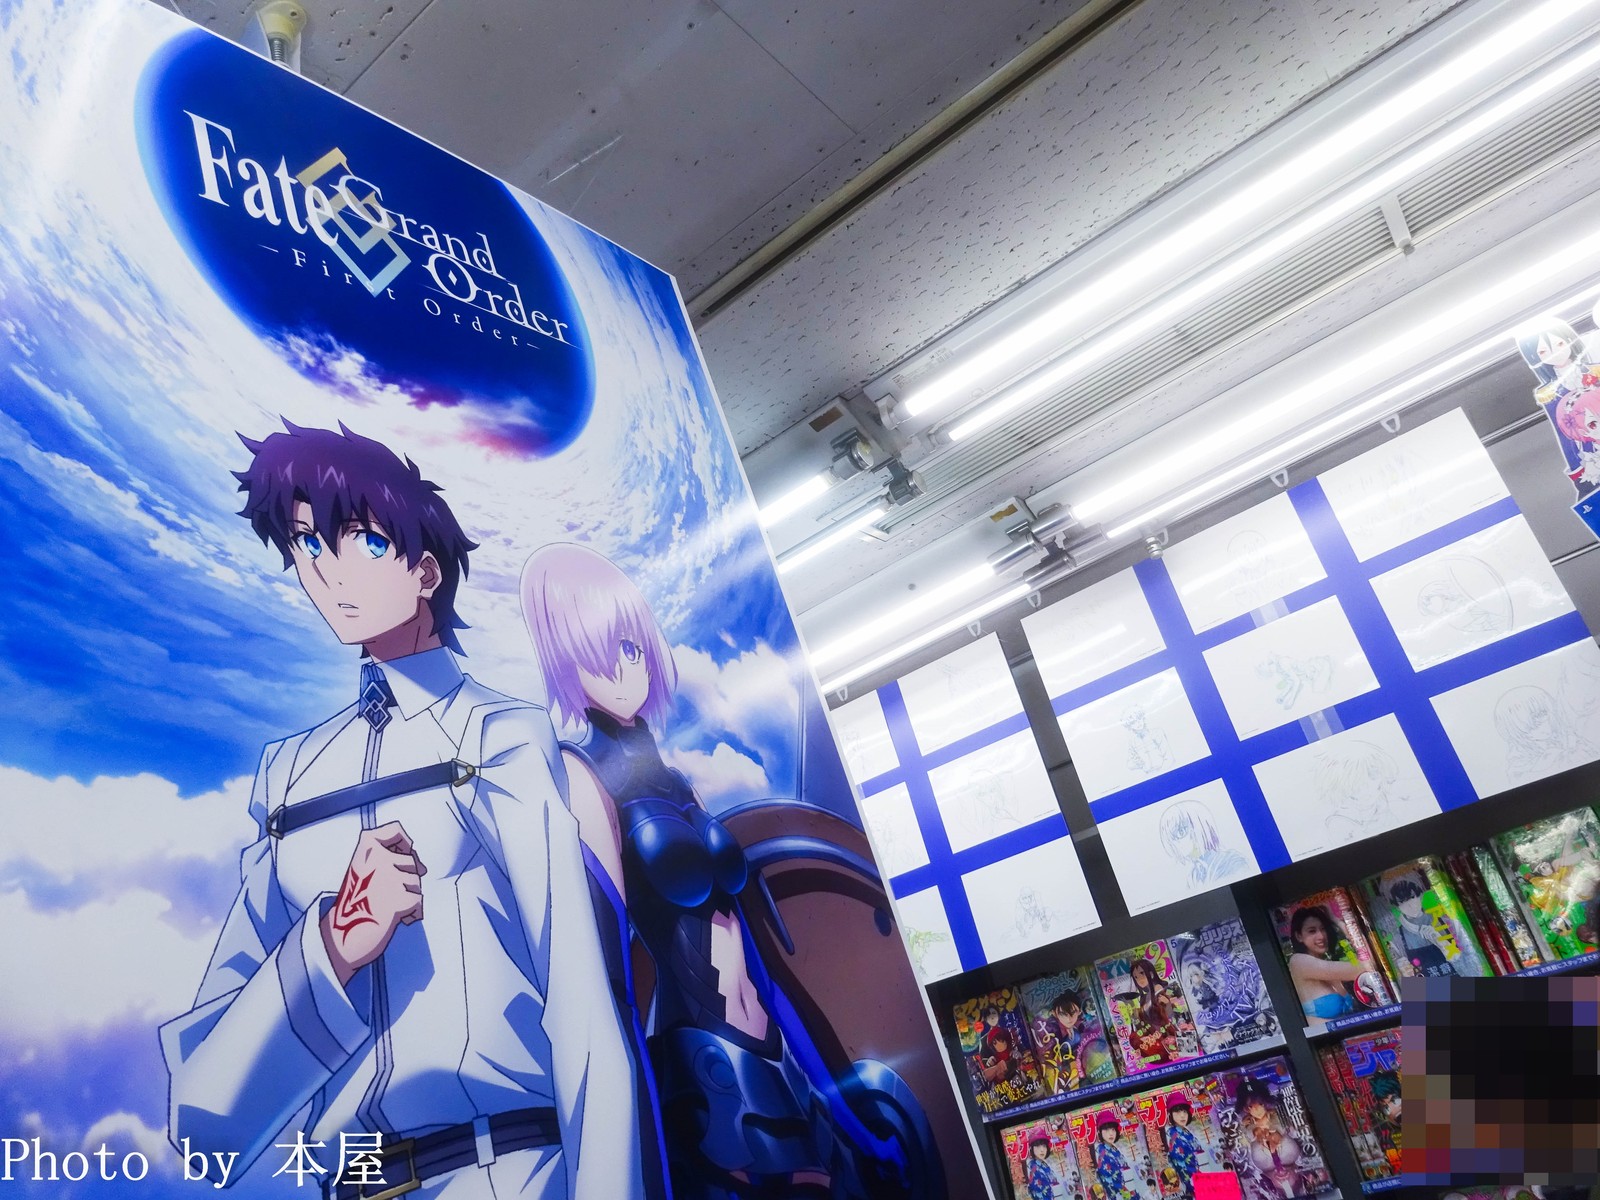 Fategrand Order First Order のbd Dvdの発売を記念したパネル展が開催 アキバな本屋